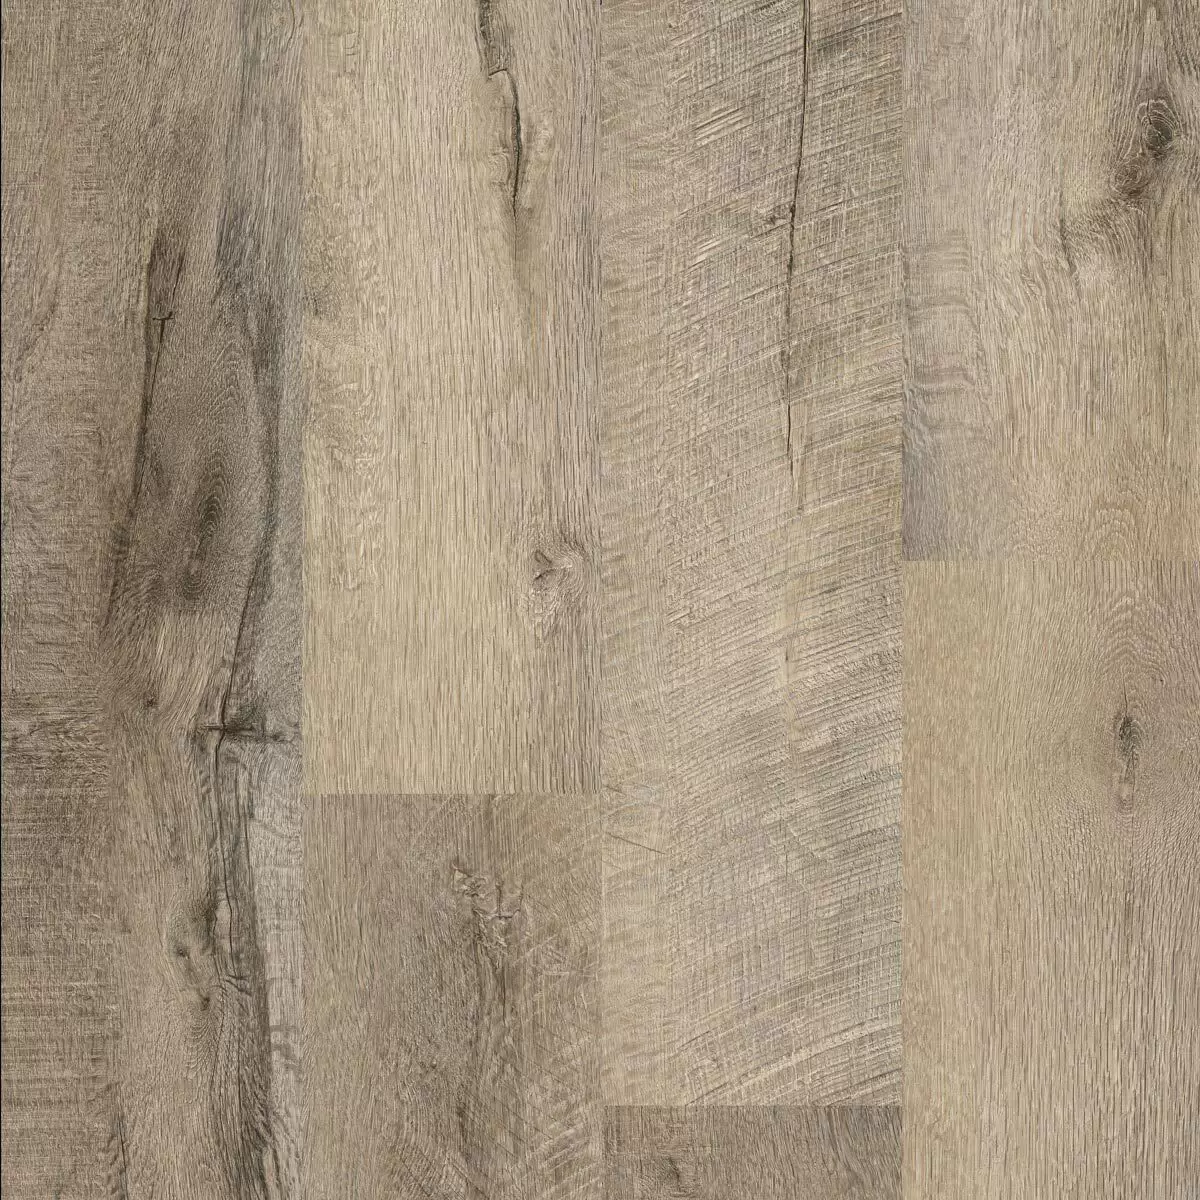 Golden Select Rigid Core Vinyl Plank Flooring - Country House Sample Swatch